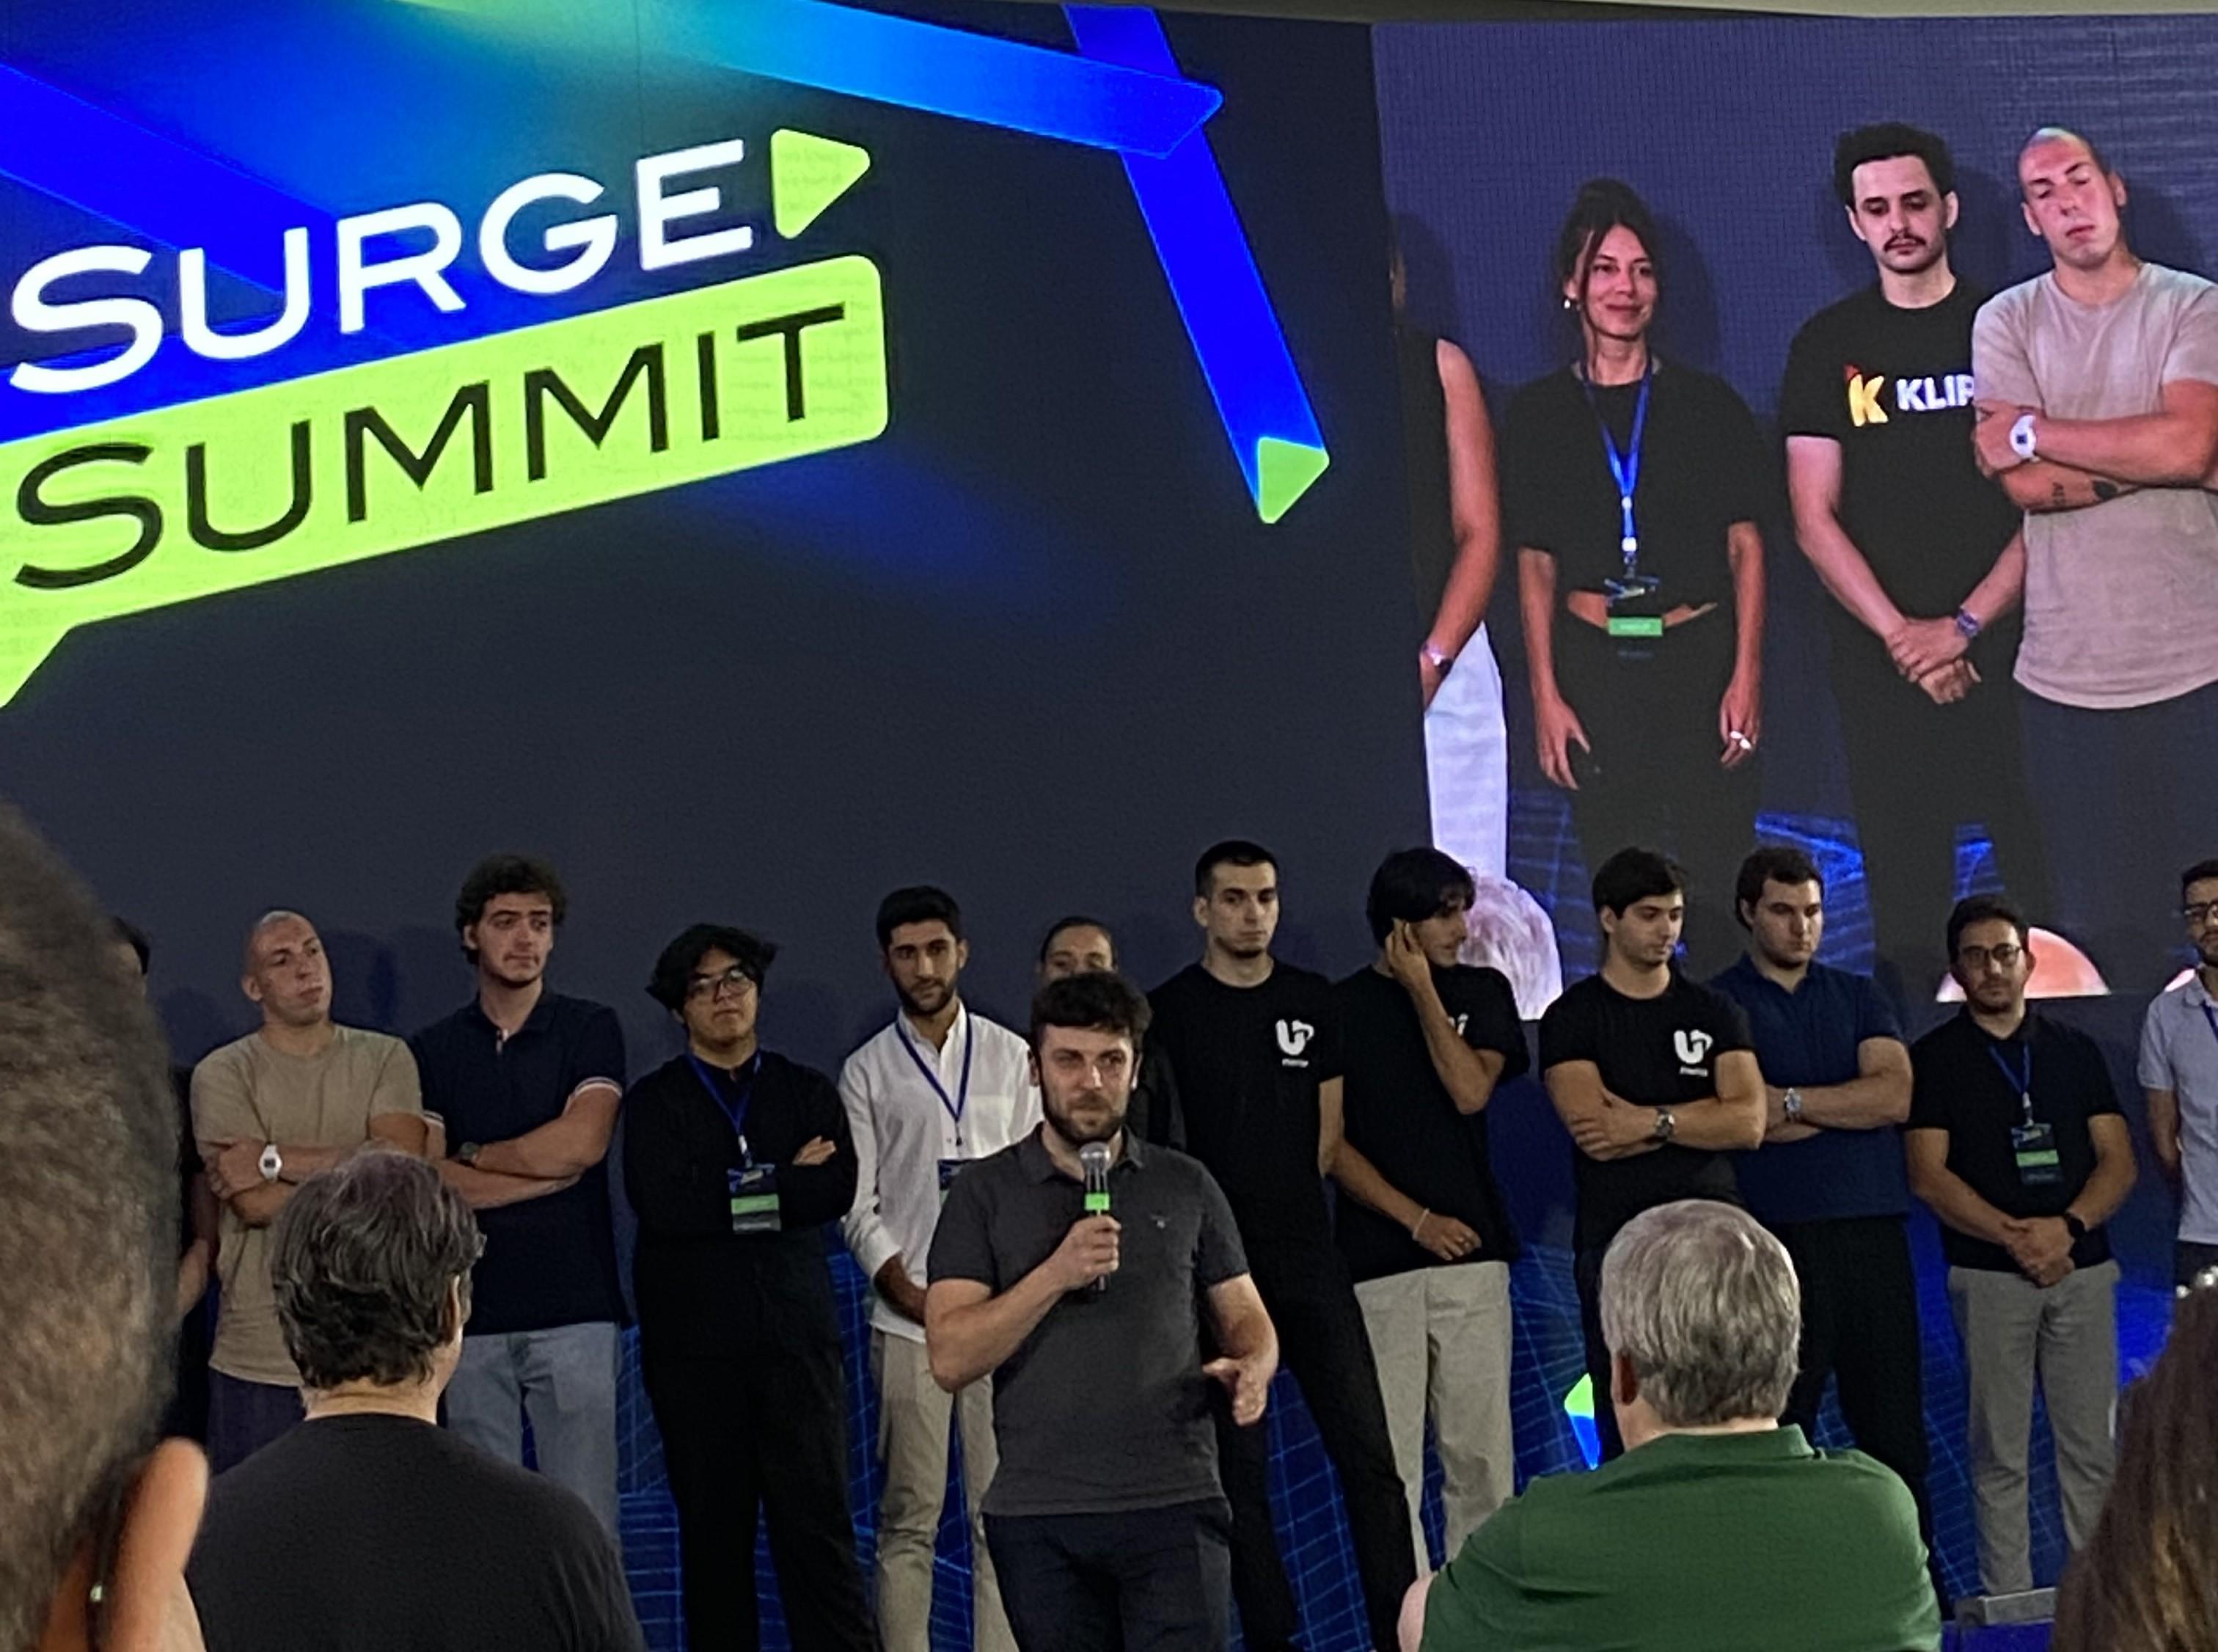 Wempler won the startup batle at Surge Summit